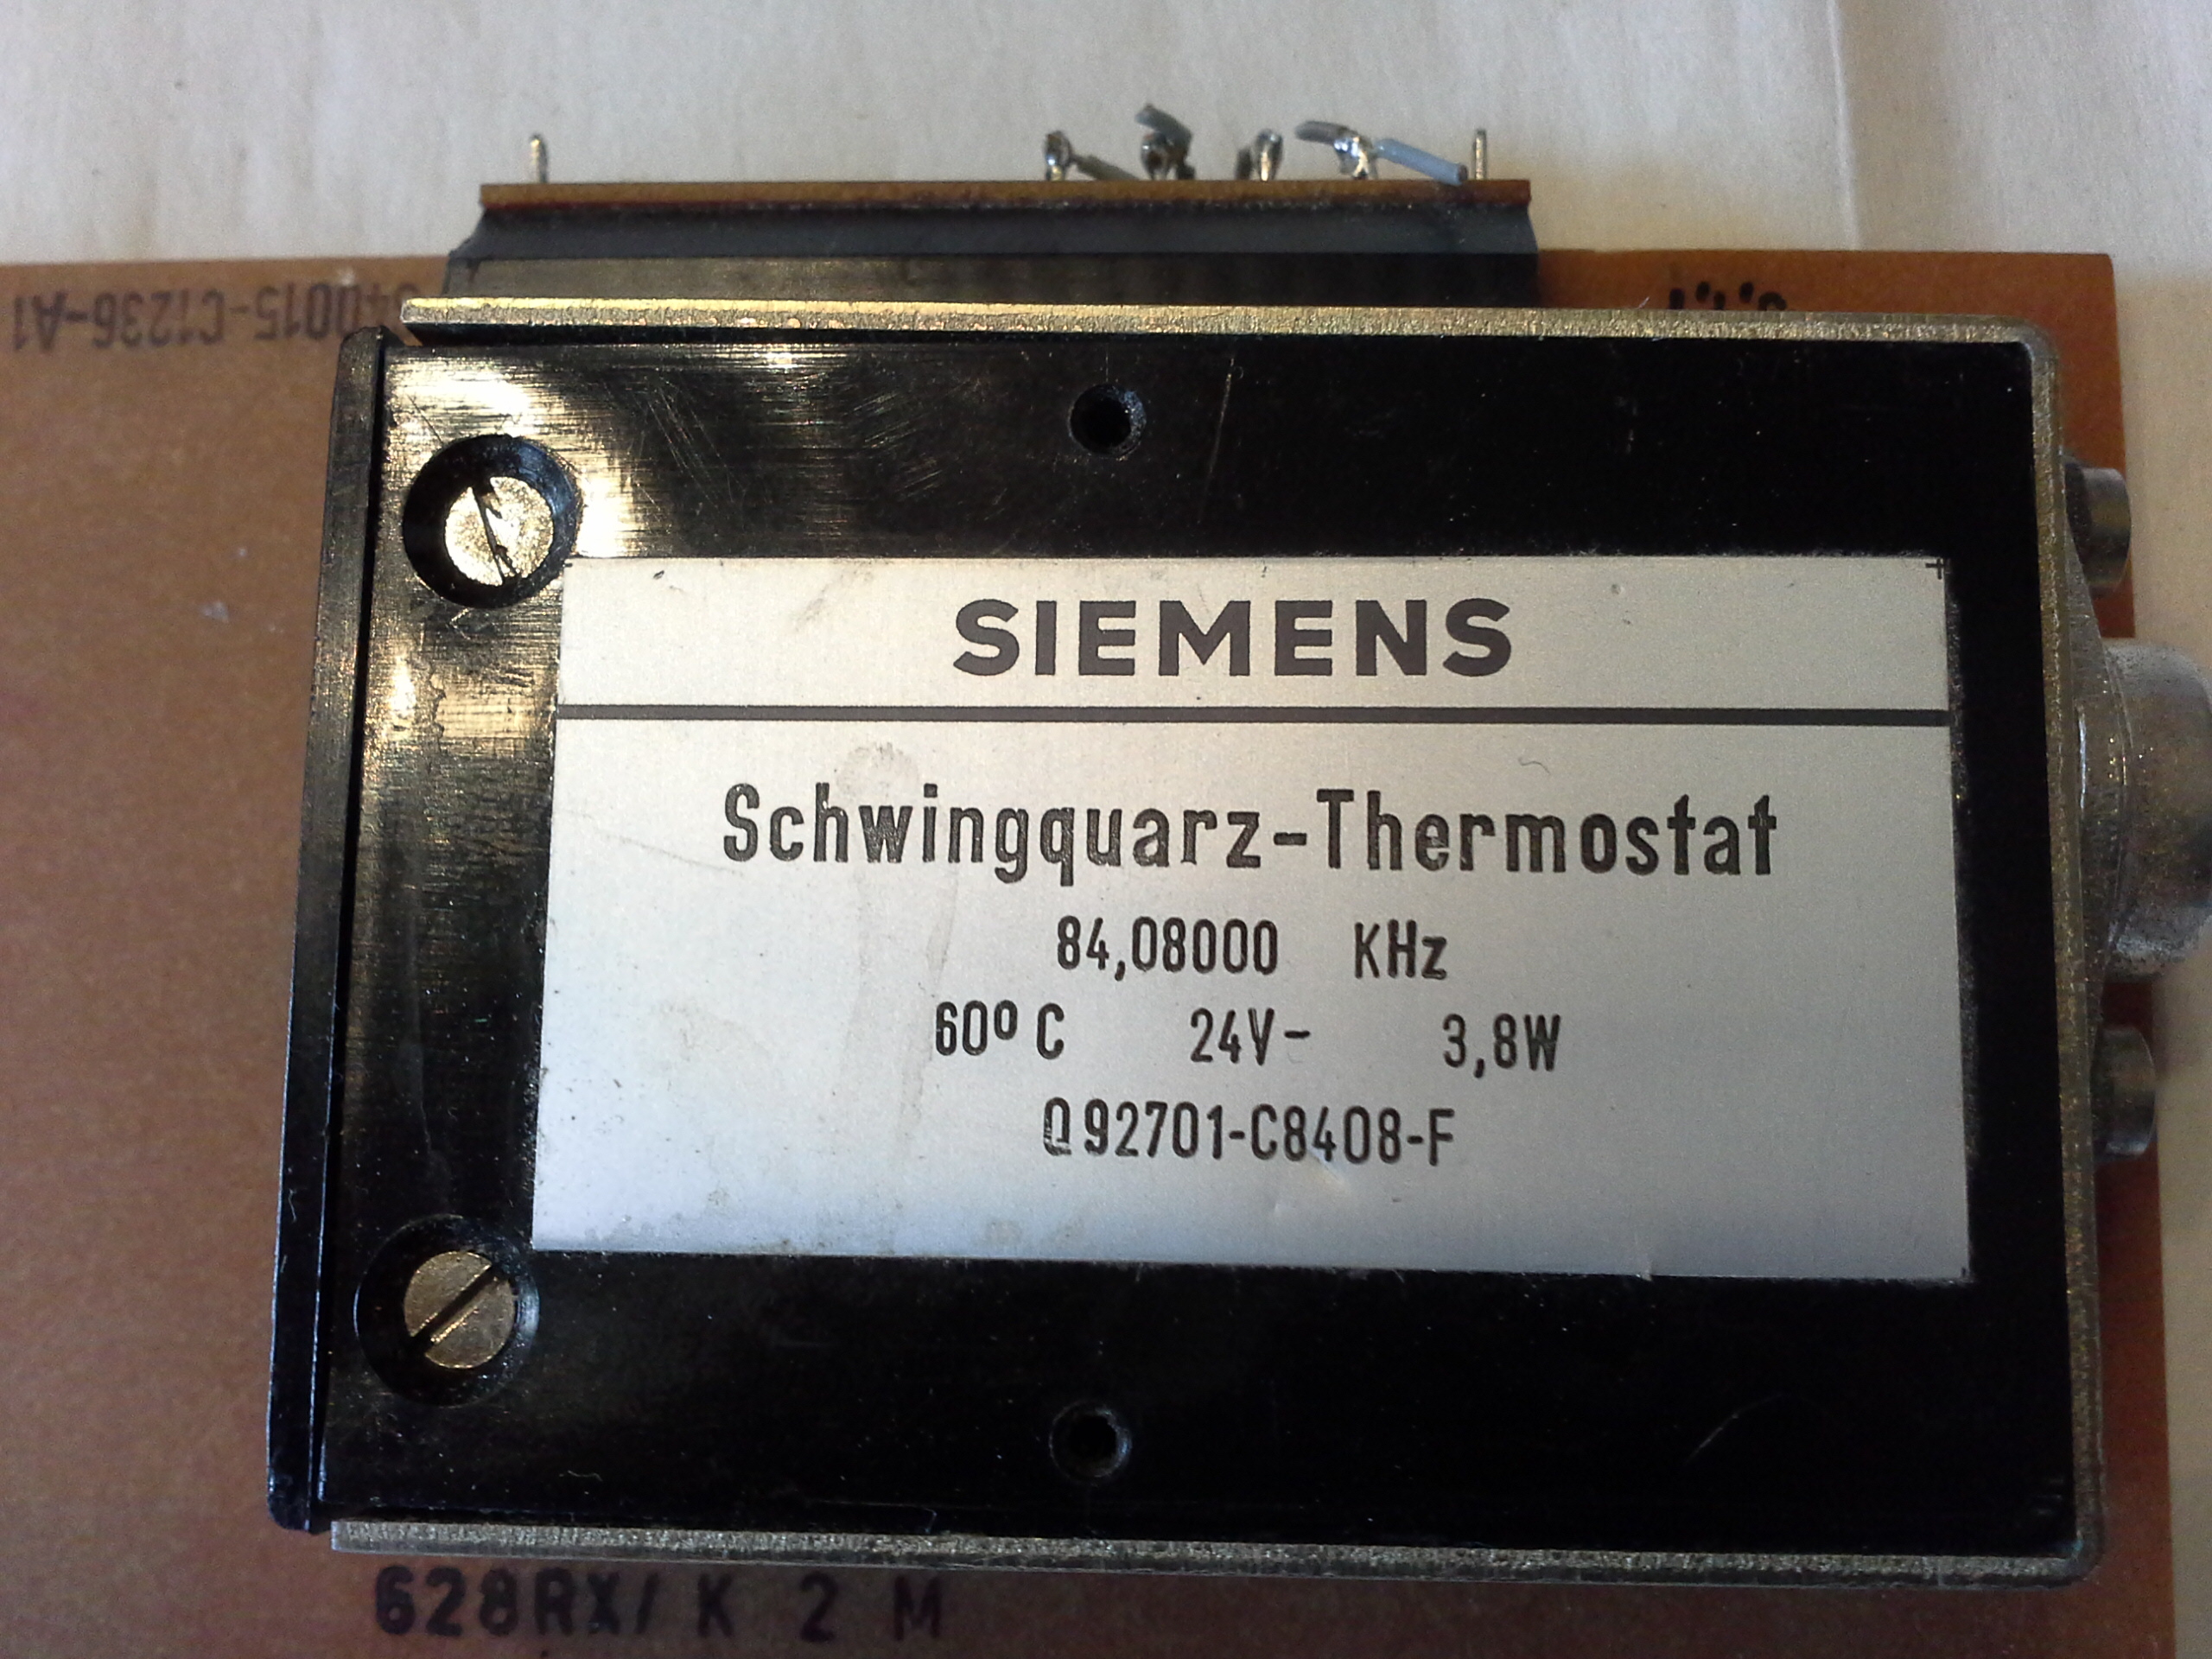 Siemens Schwingquarz-Thermostat 84,080 KHz